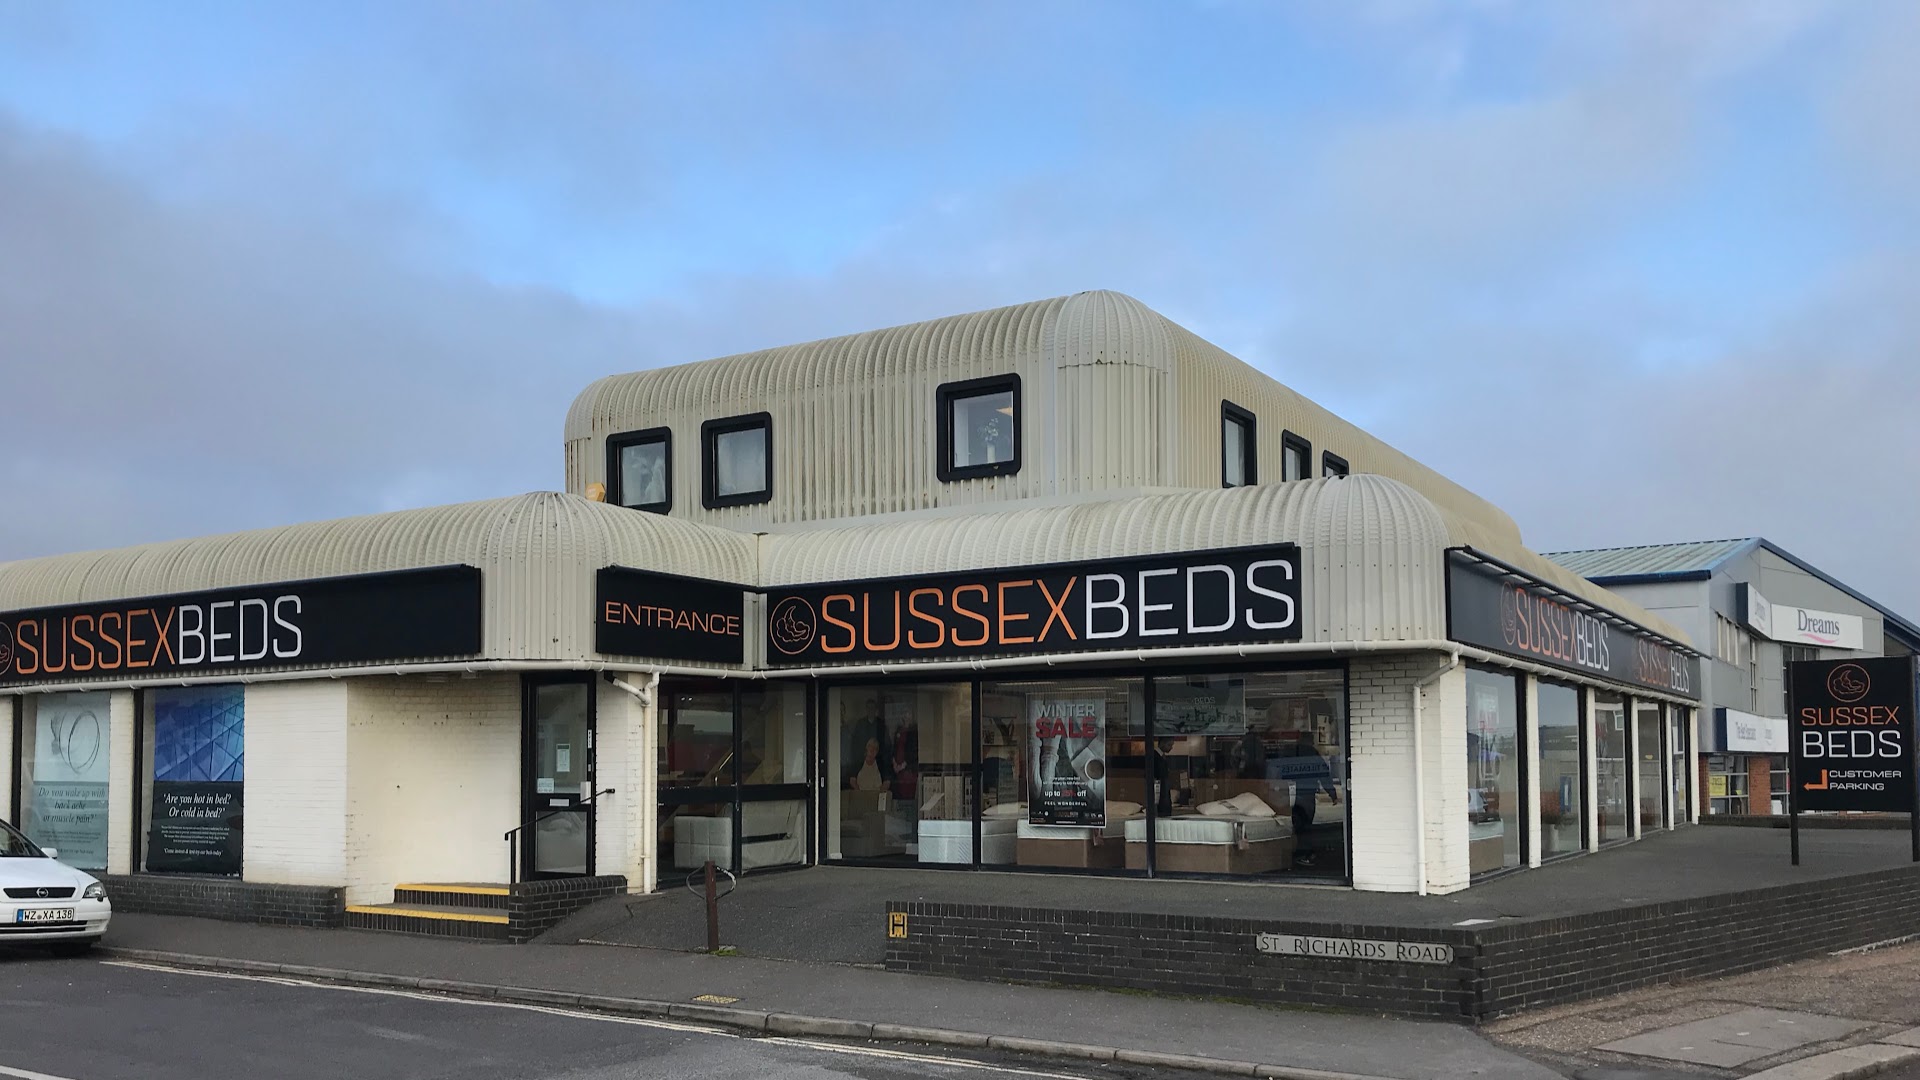 Sussex Beds